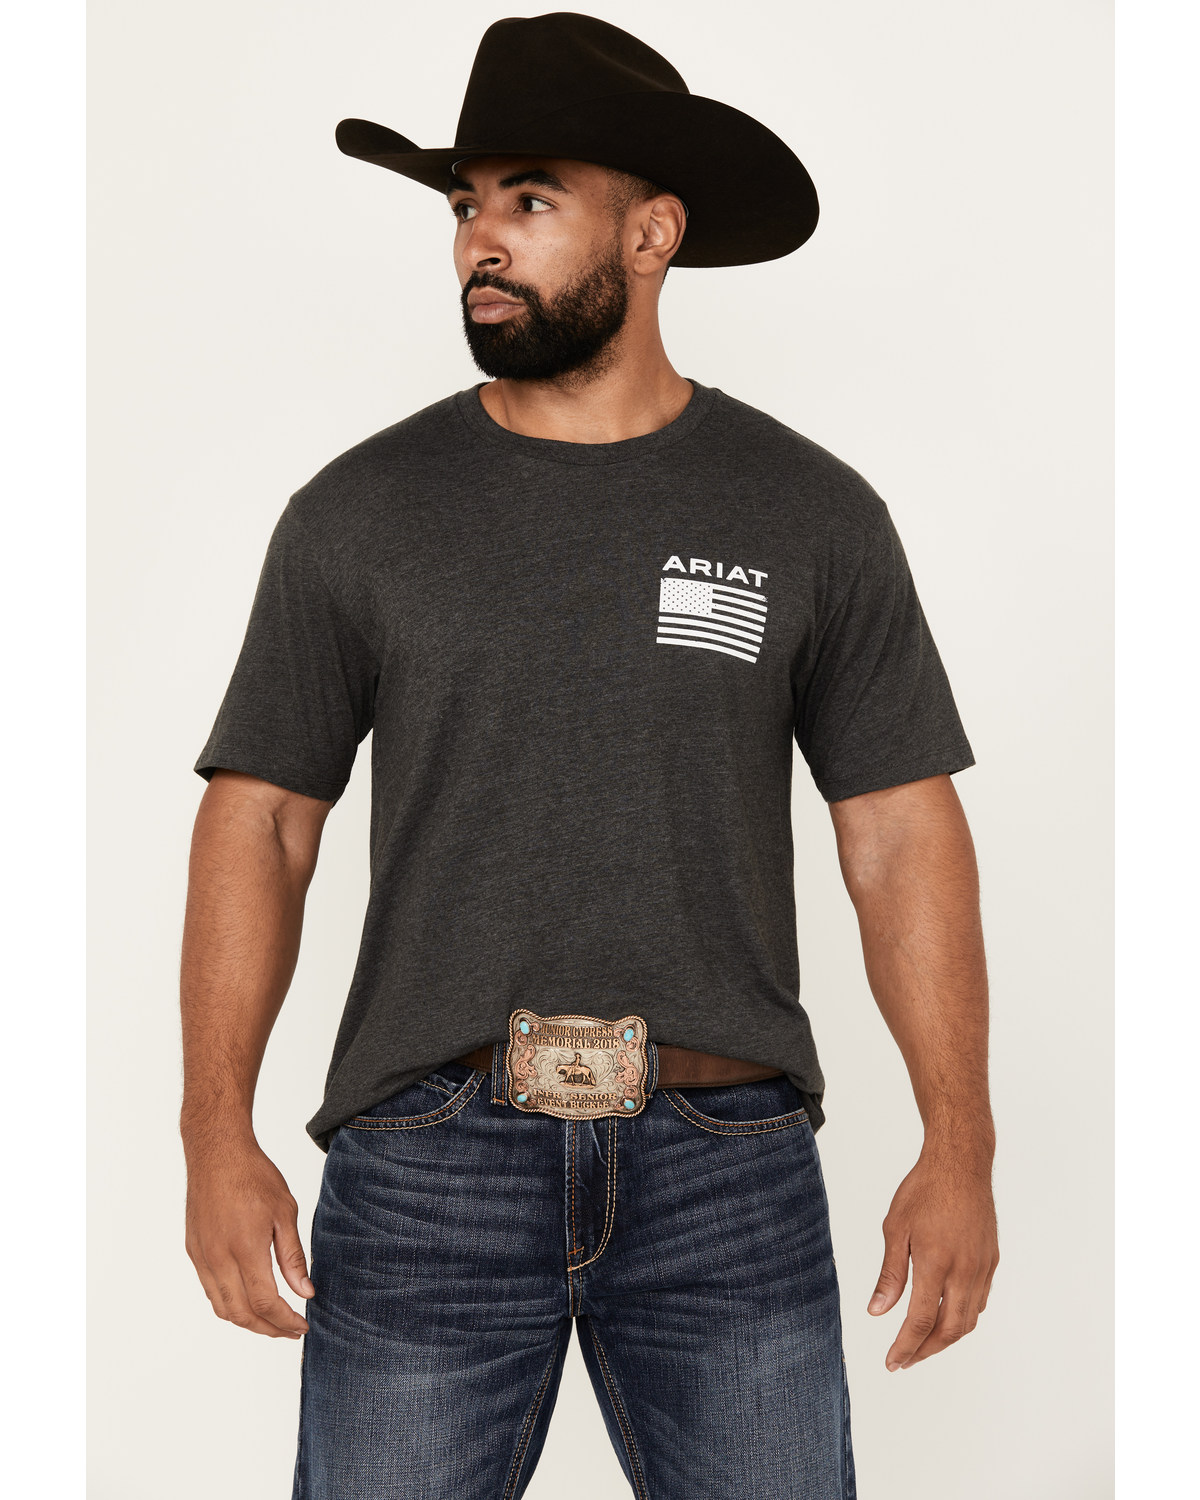 Ariat Men's Freedom Short Sleeve Graphic T-Shirt